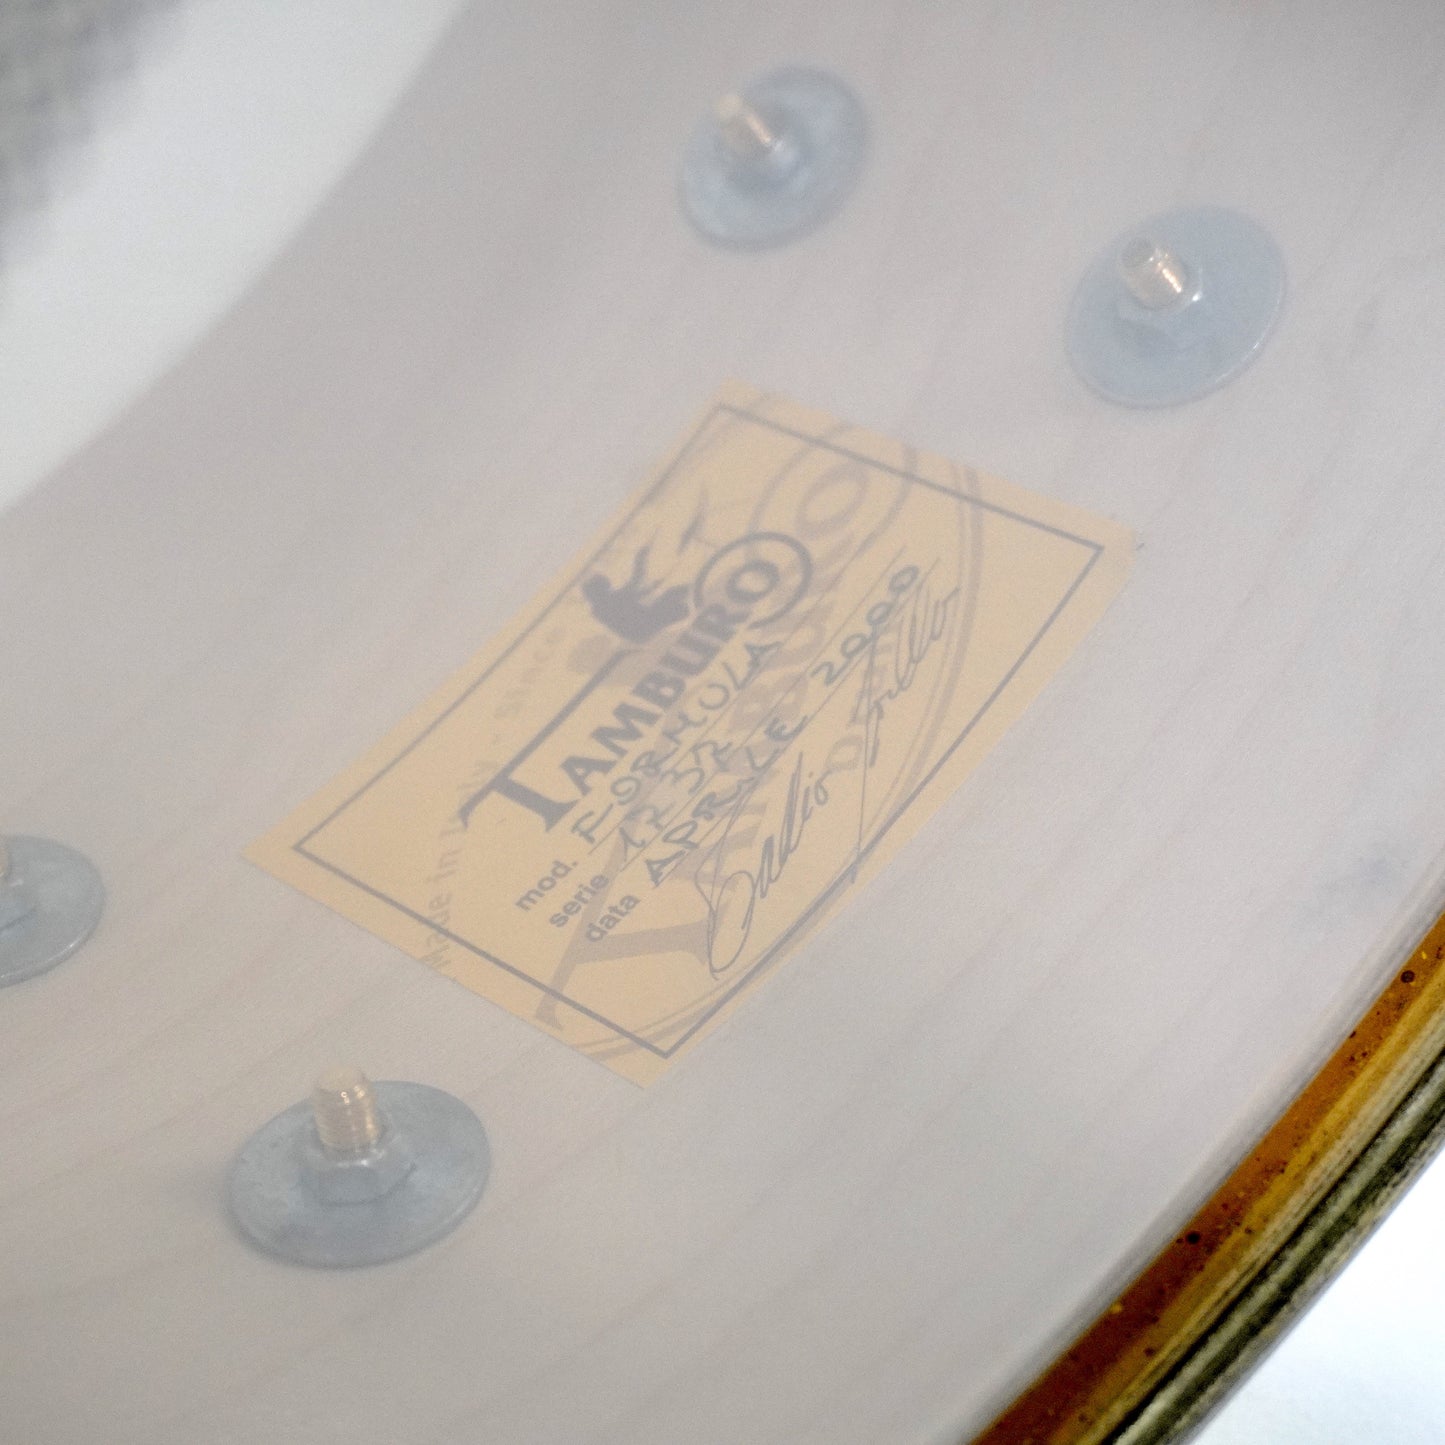 Tamburo 14” x 6" Formula Snare in Natural Maple Gloss